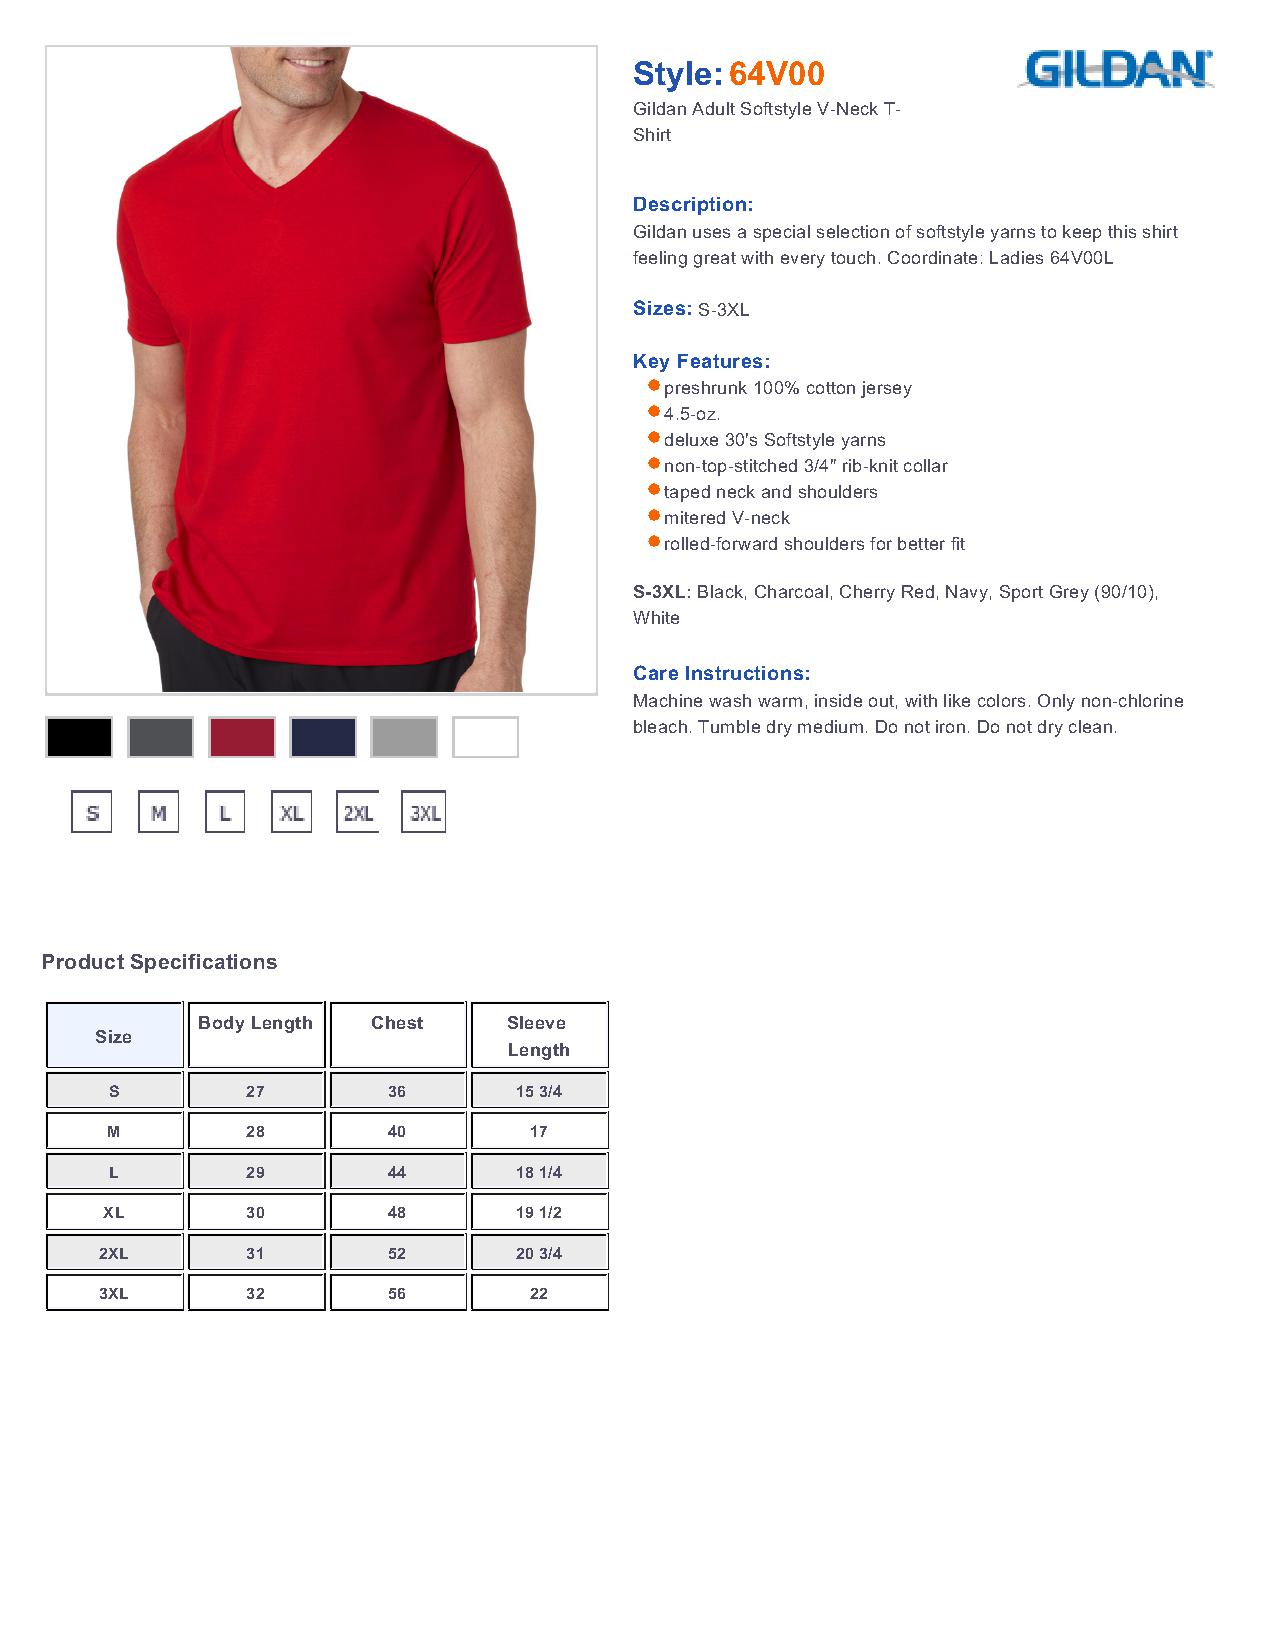 Gildan 64V00-Softstyle V-Neck T-Shirt $5.85 - Men's T-Shirts